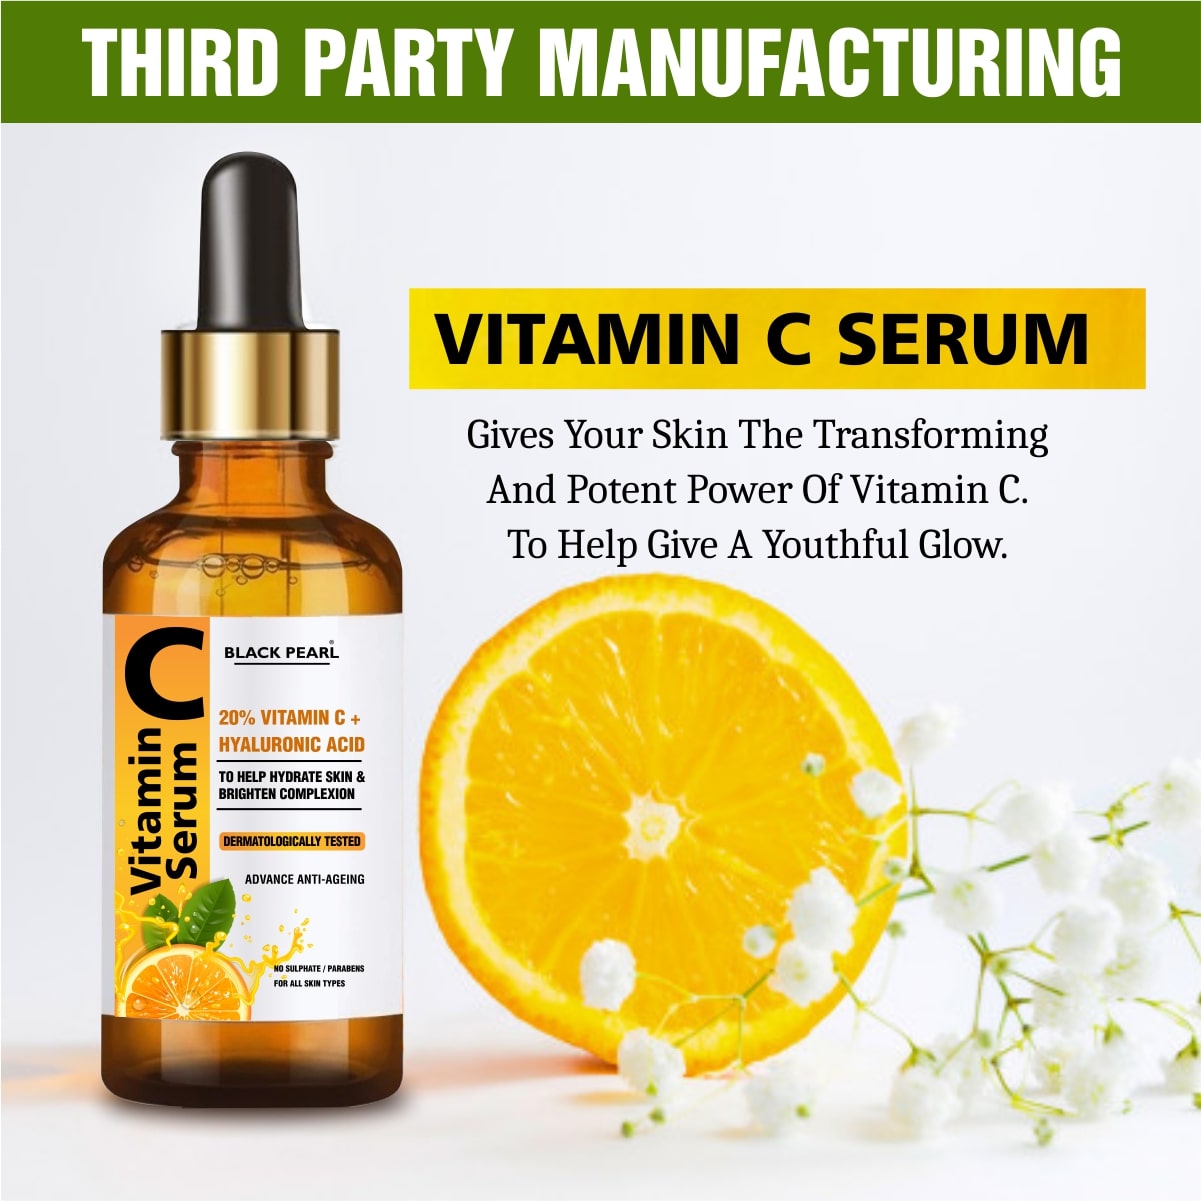 Vitamin C Serum Third Party Manufacturing